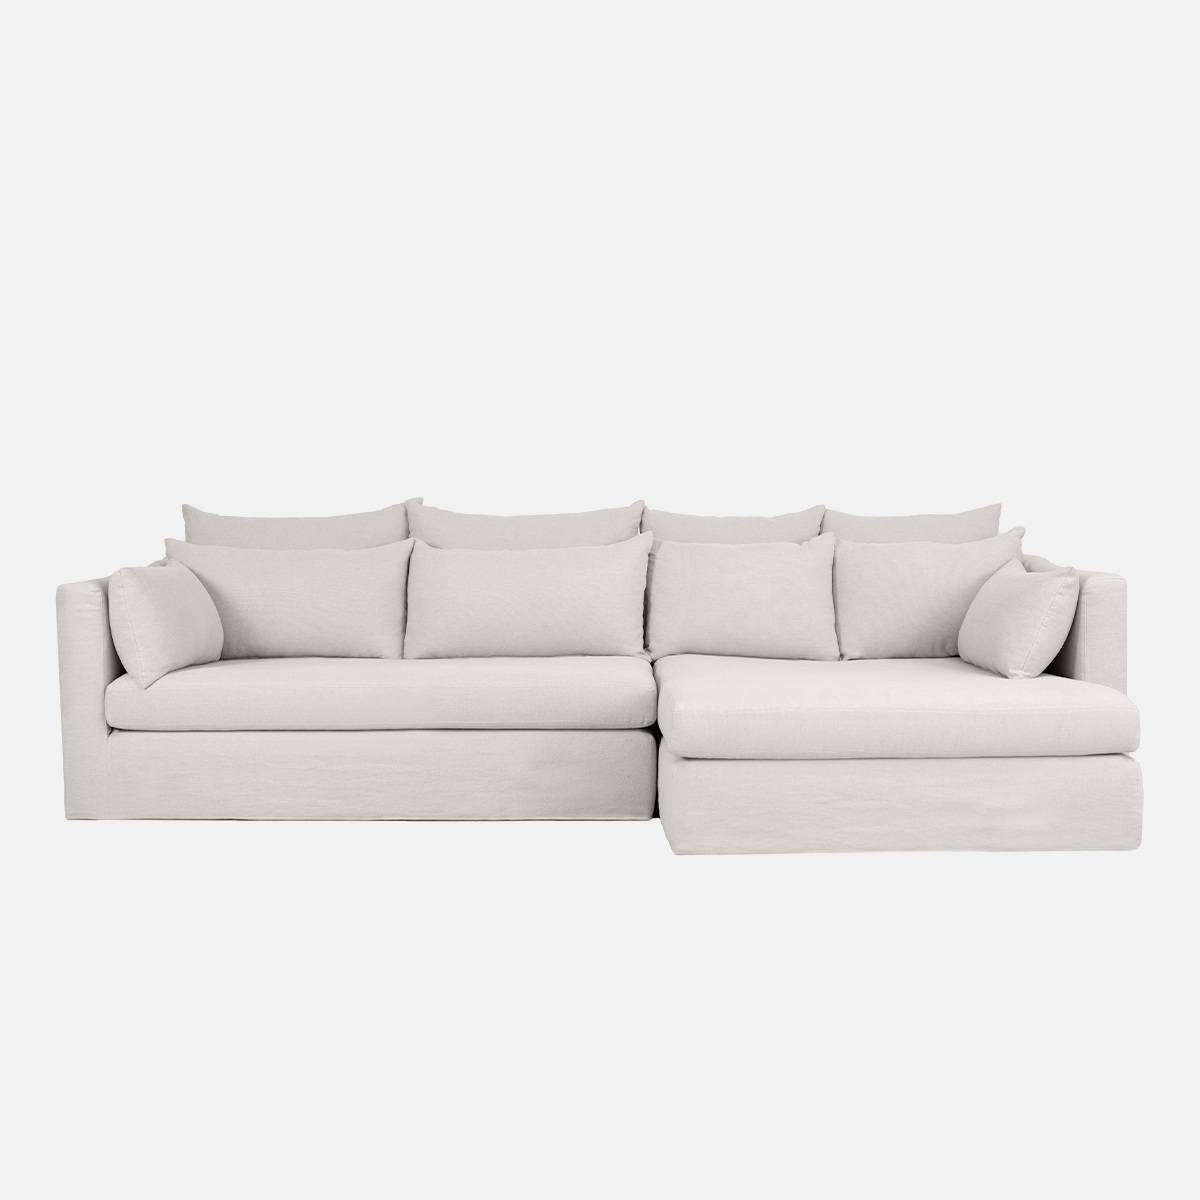 SuperBox corner sofa - Right angle, Various Sizes - Linen - image 1